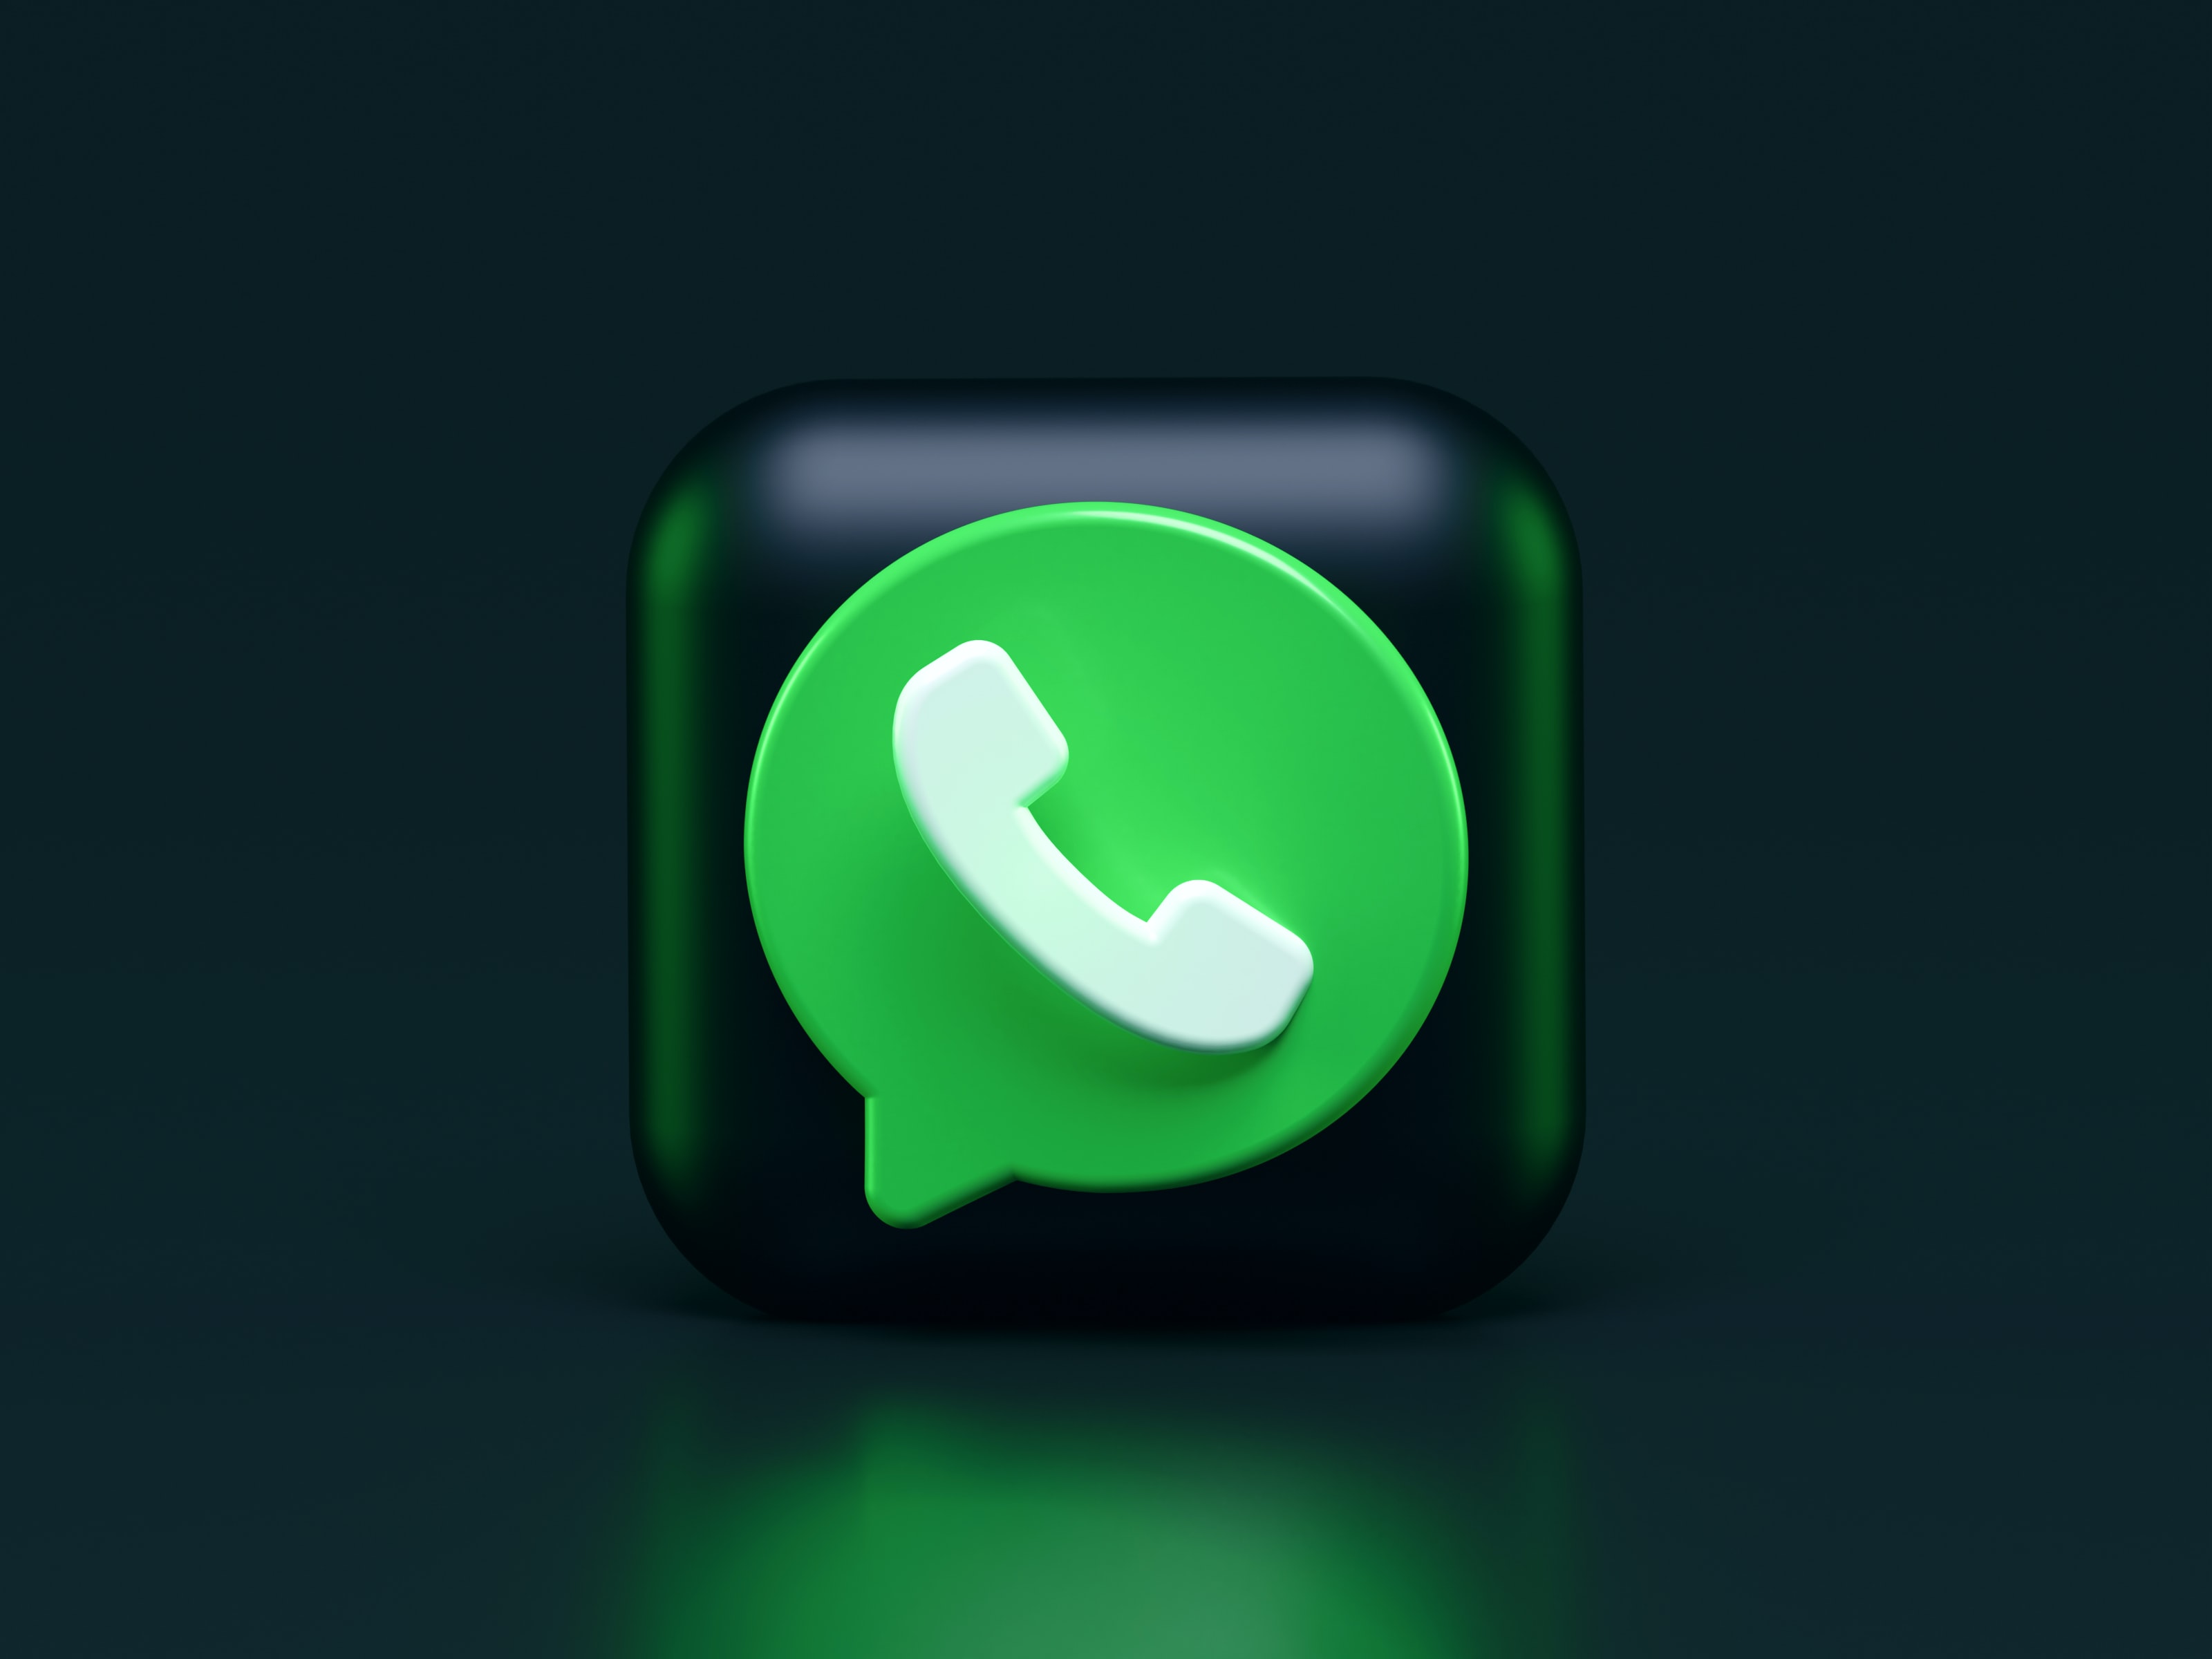  WhatsApp Perpanjang Batas Waktu Persyaratan Baru hingga 19 Juni